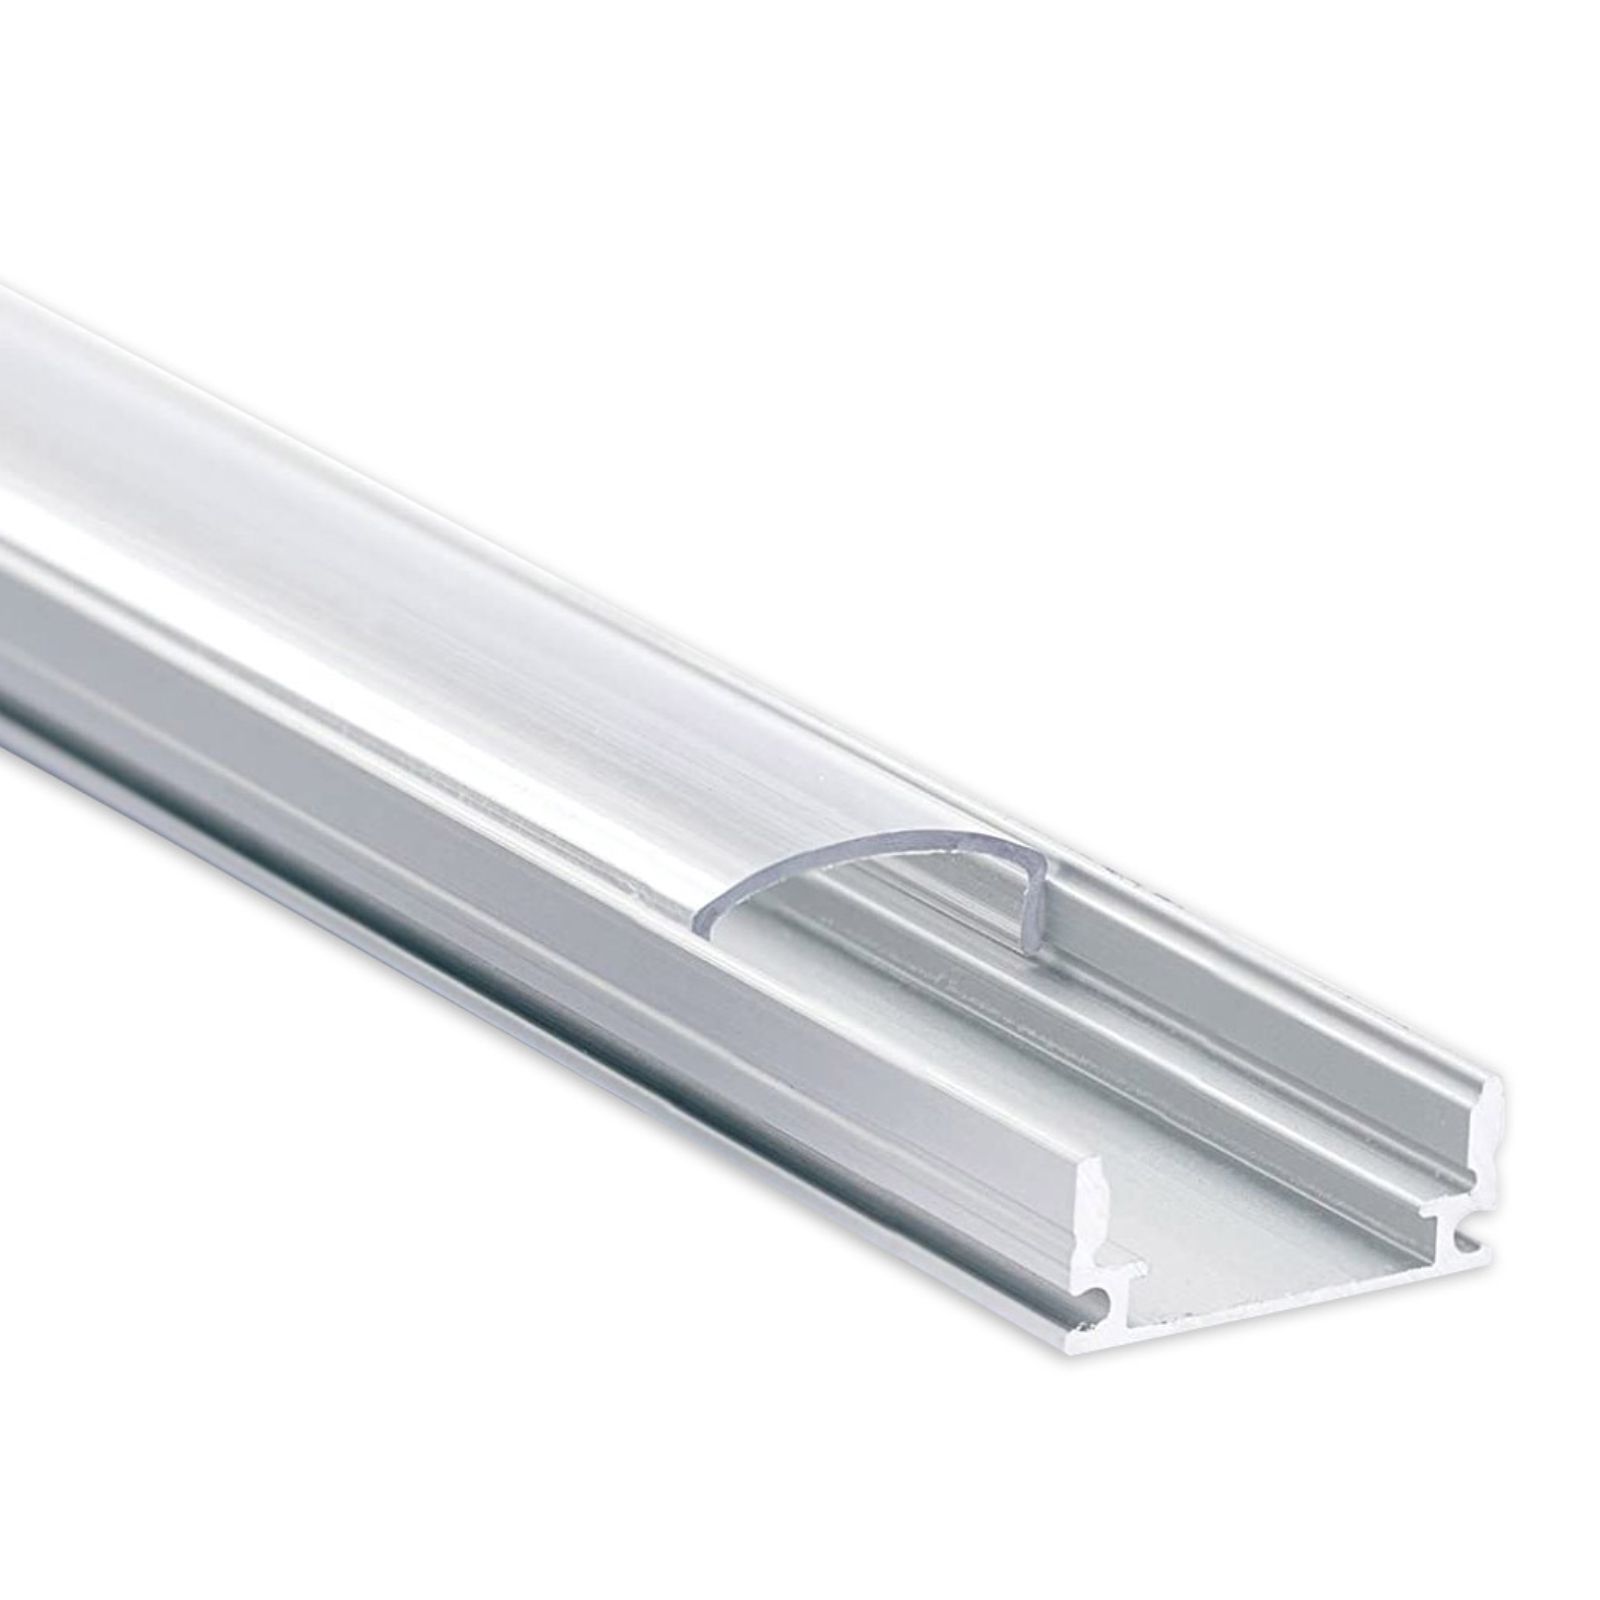 Aluminium profile LED-Strips, clear, 2 m - Length: 2000 mm